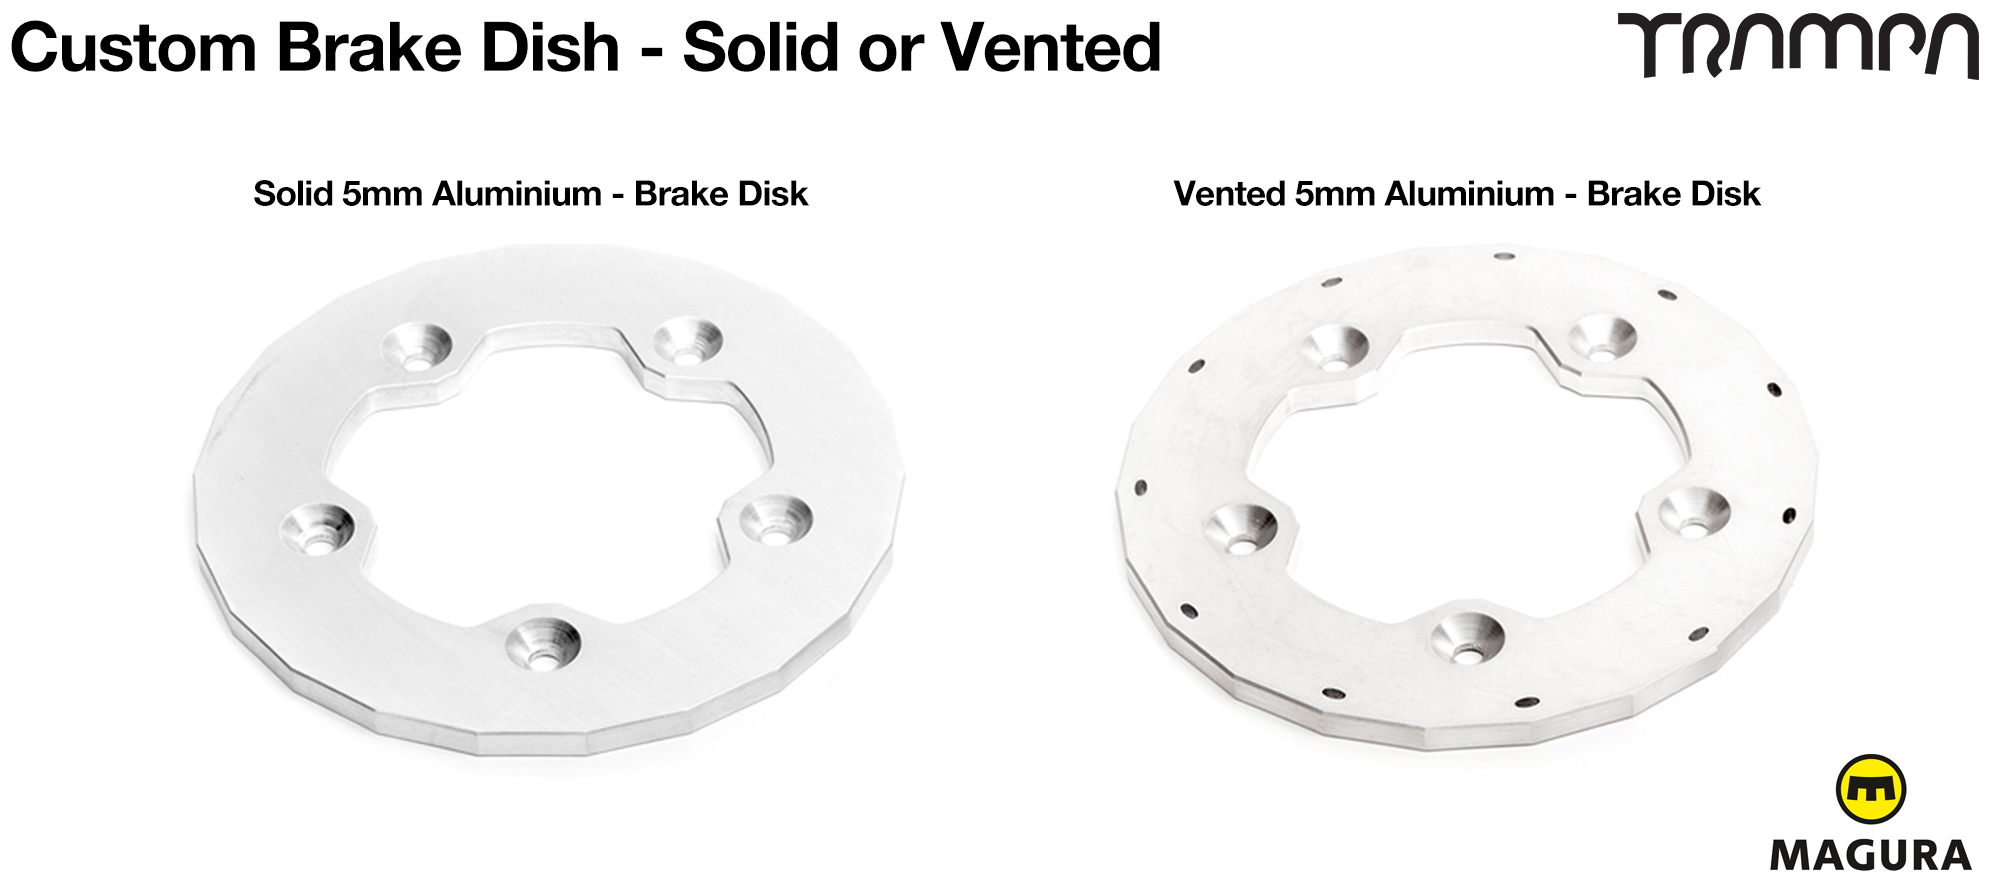 BRAKE DISKS - 5mm CNC Aluminum SOLID or VENTED to fit 5 spoke TRAMPA Hubs 